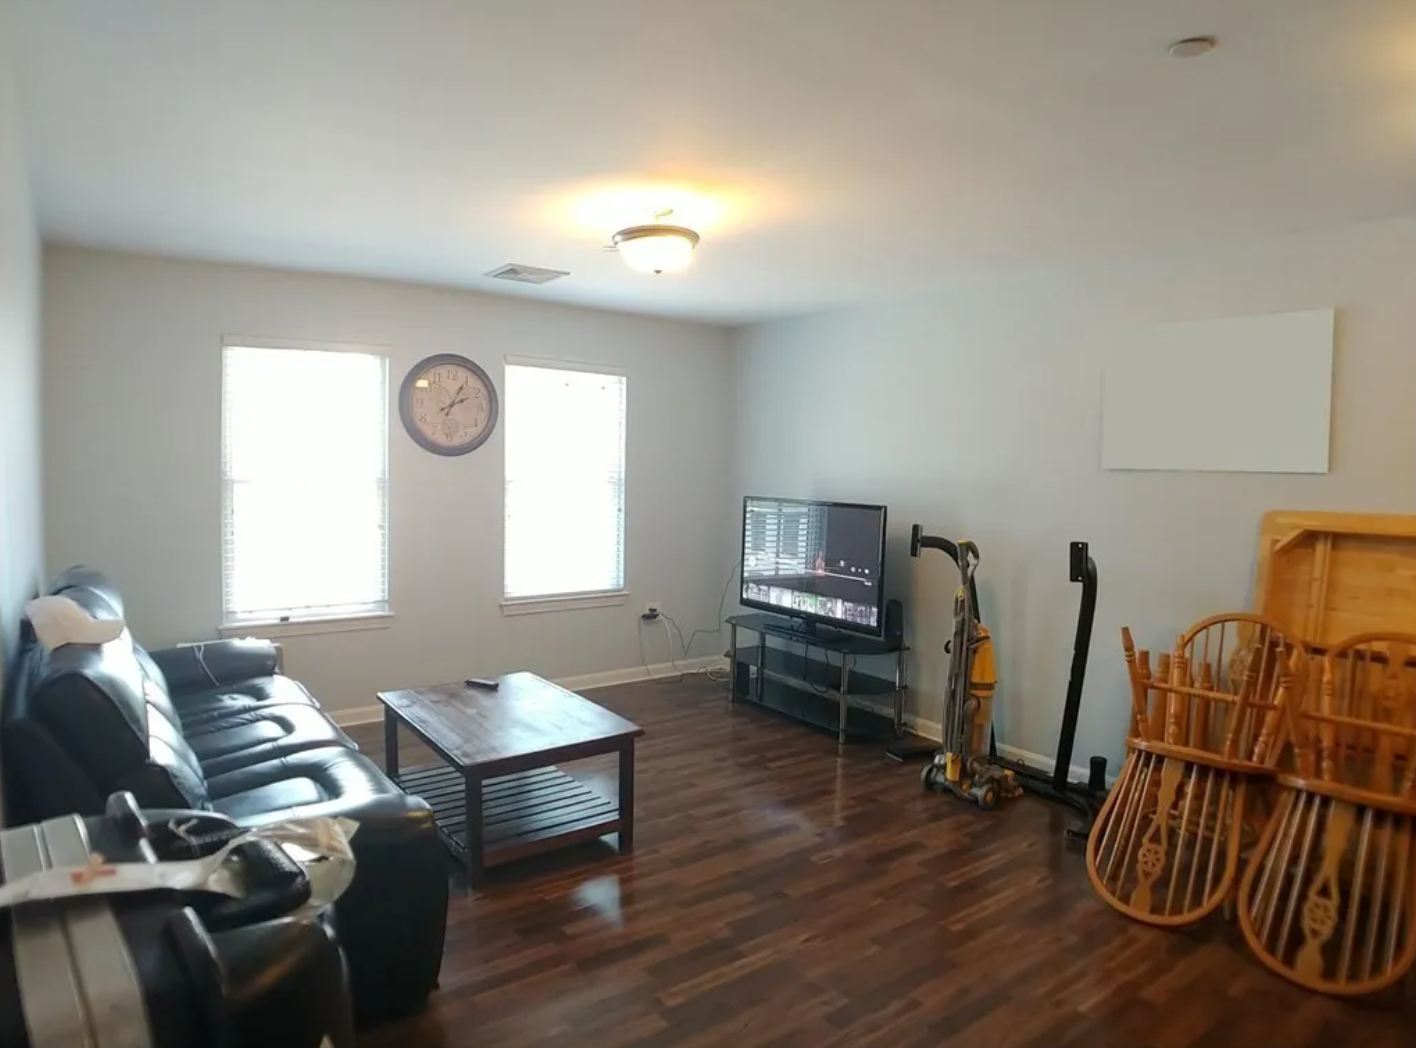 Living room with beige walls, hardwood floors, and single-hung windows.